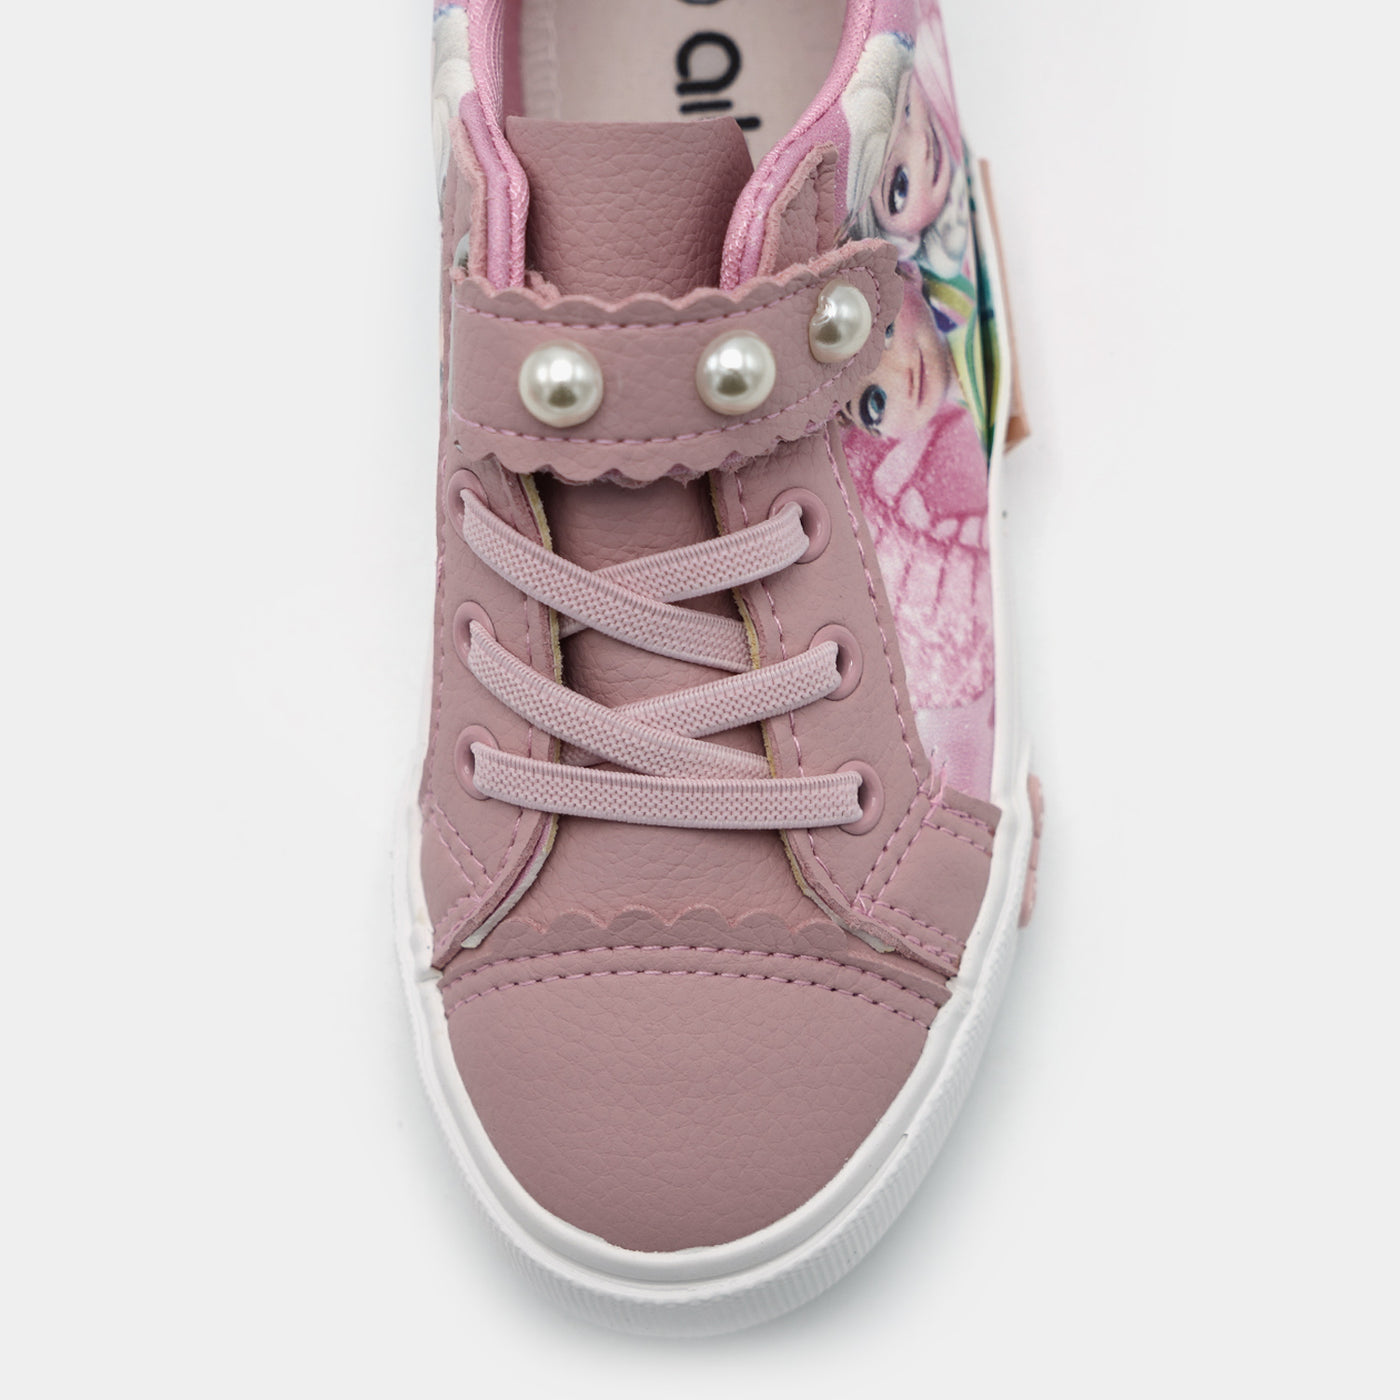 Girls Sneakers 5512-Pink